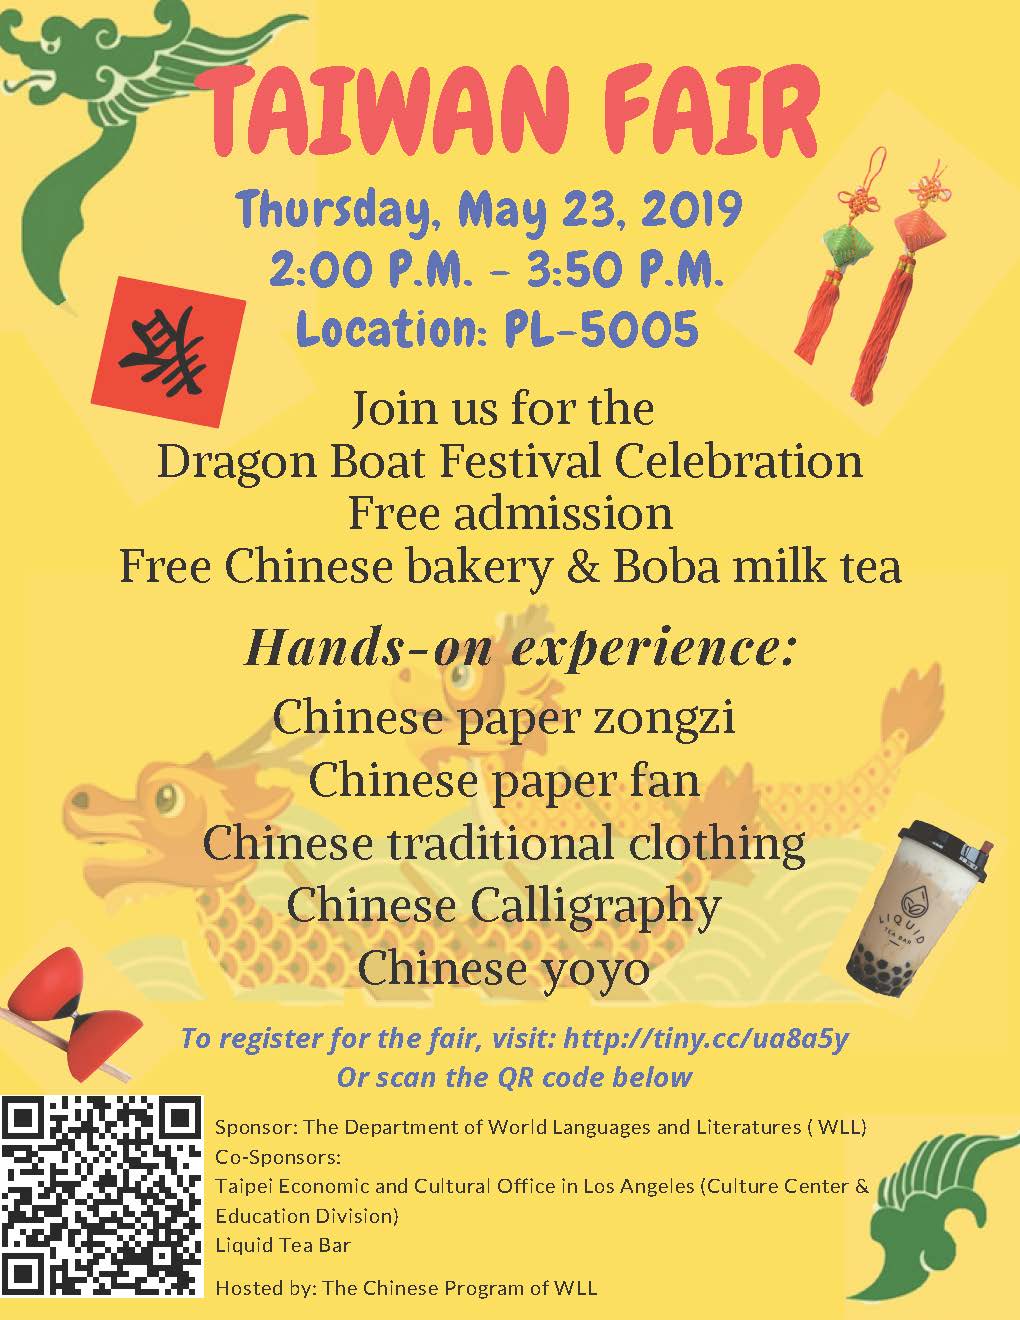 Taiwan Fair Dragon Boat Festival Celebration set for Thursday, May 23, at CSUSB